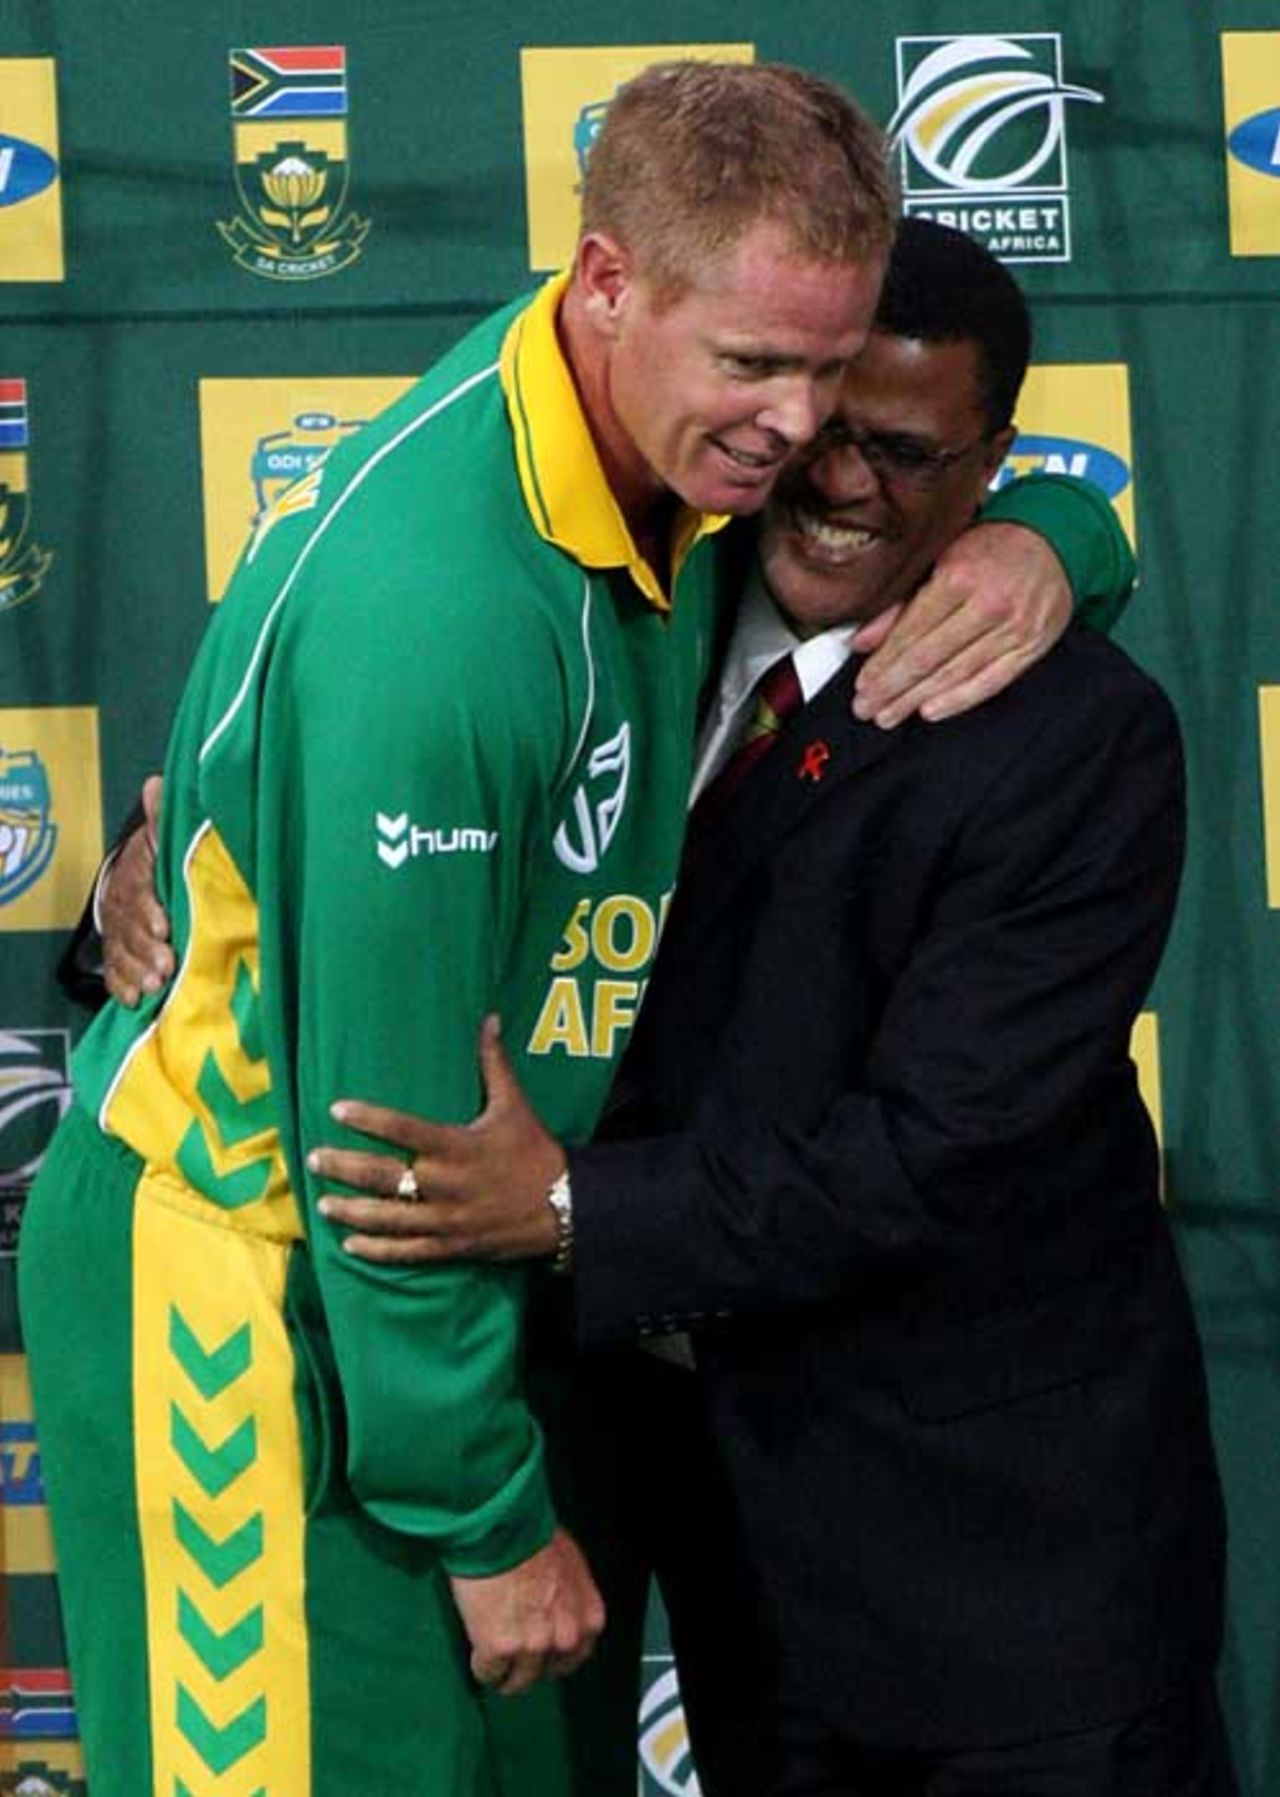 Shaun Pollock hugs Gerald Majola, the Cricket South Africa chief executive, during the presentation ceremony, 5th ODI, Johannesburg, February 3, 2008